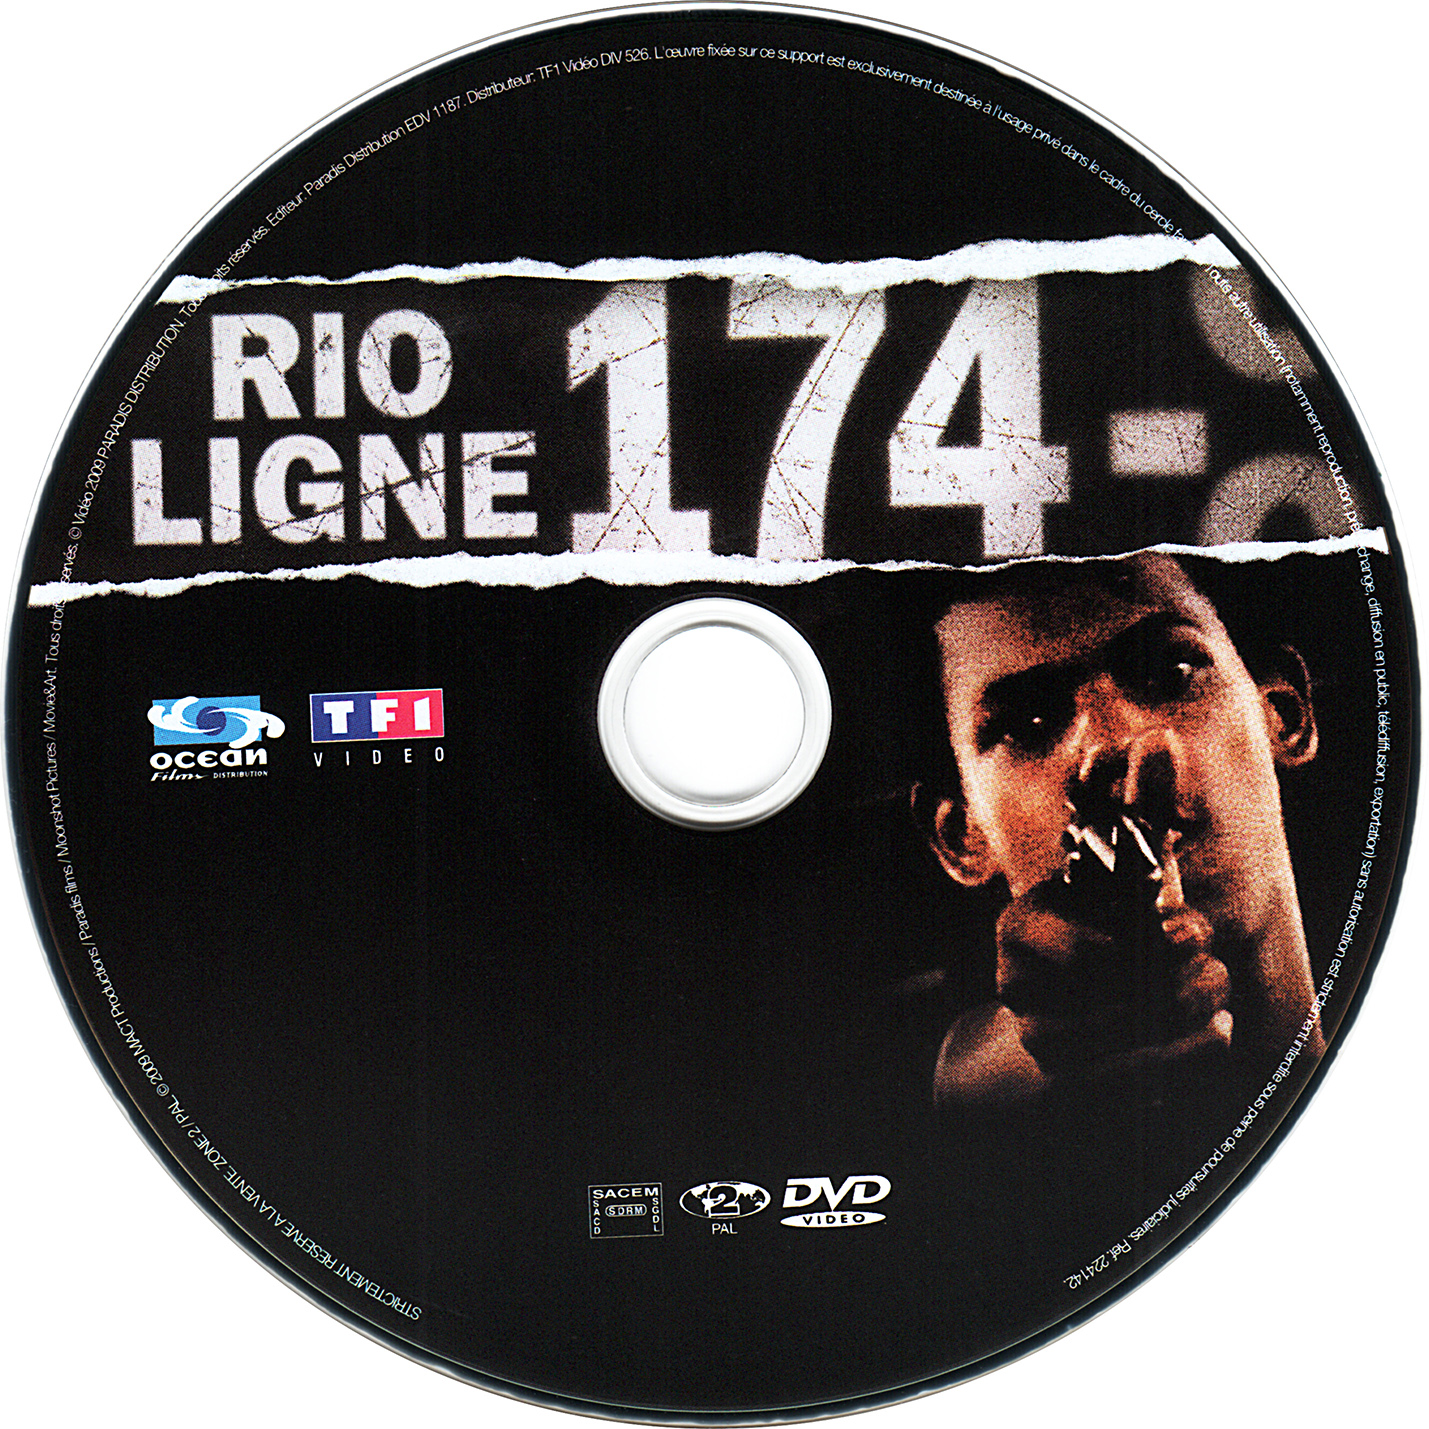 Rio ligne 174